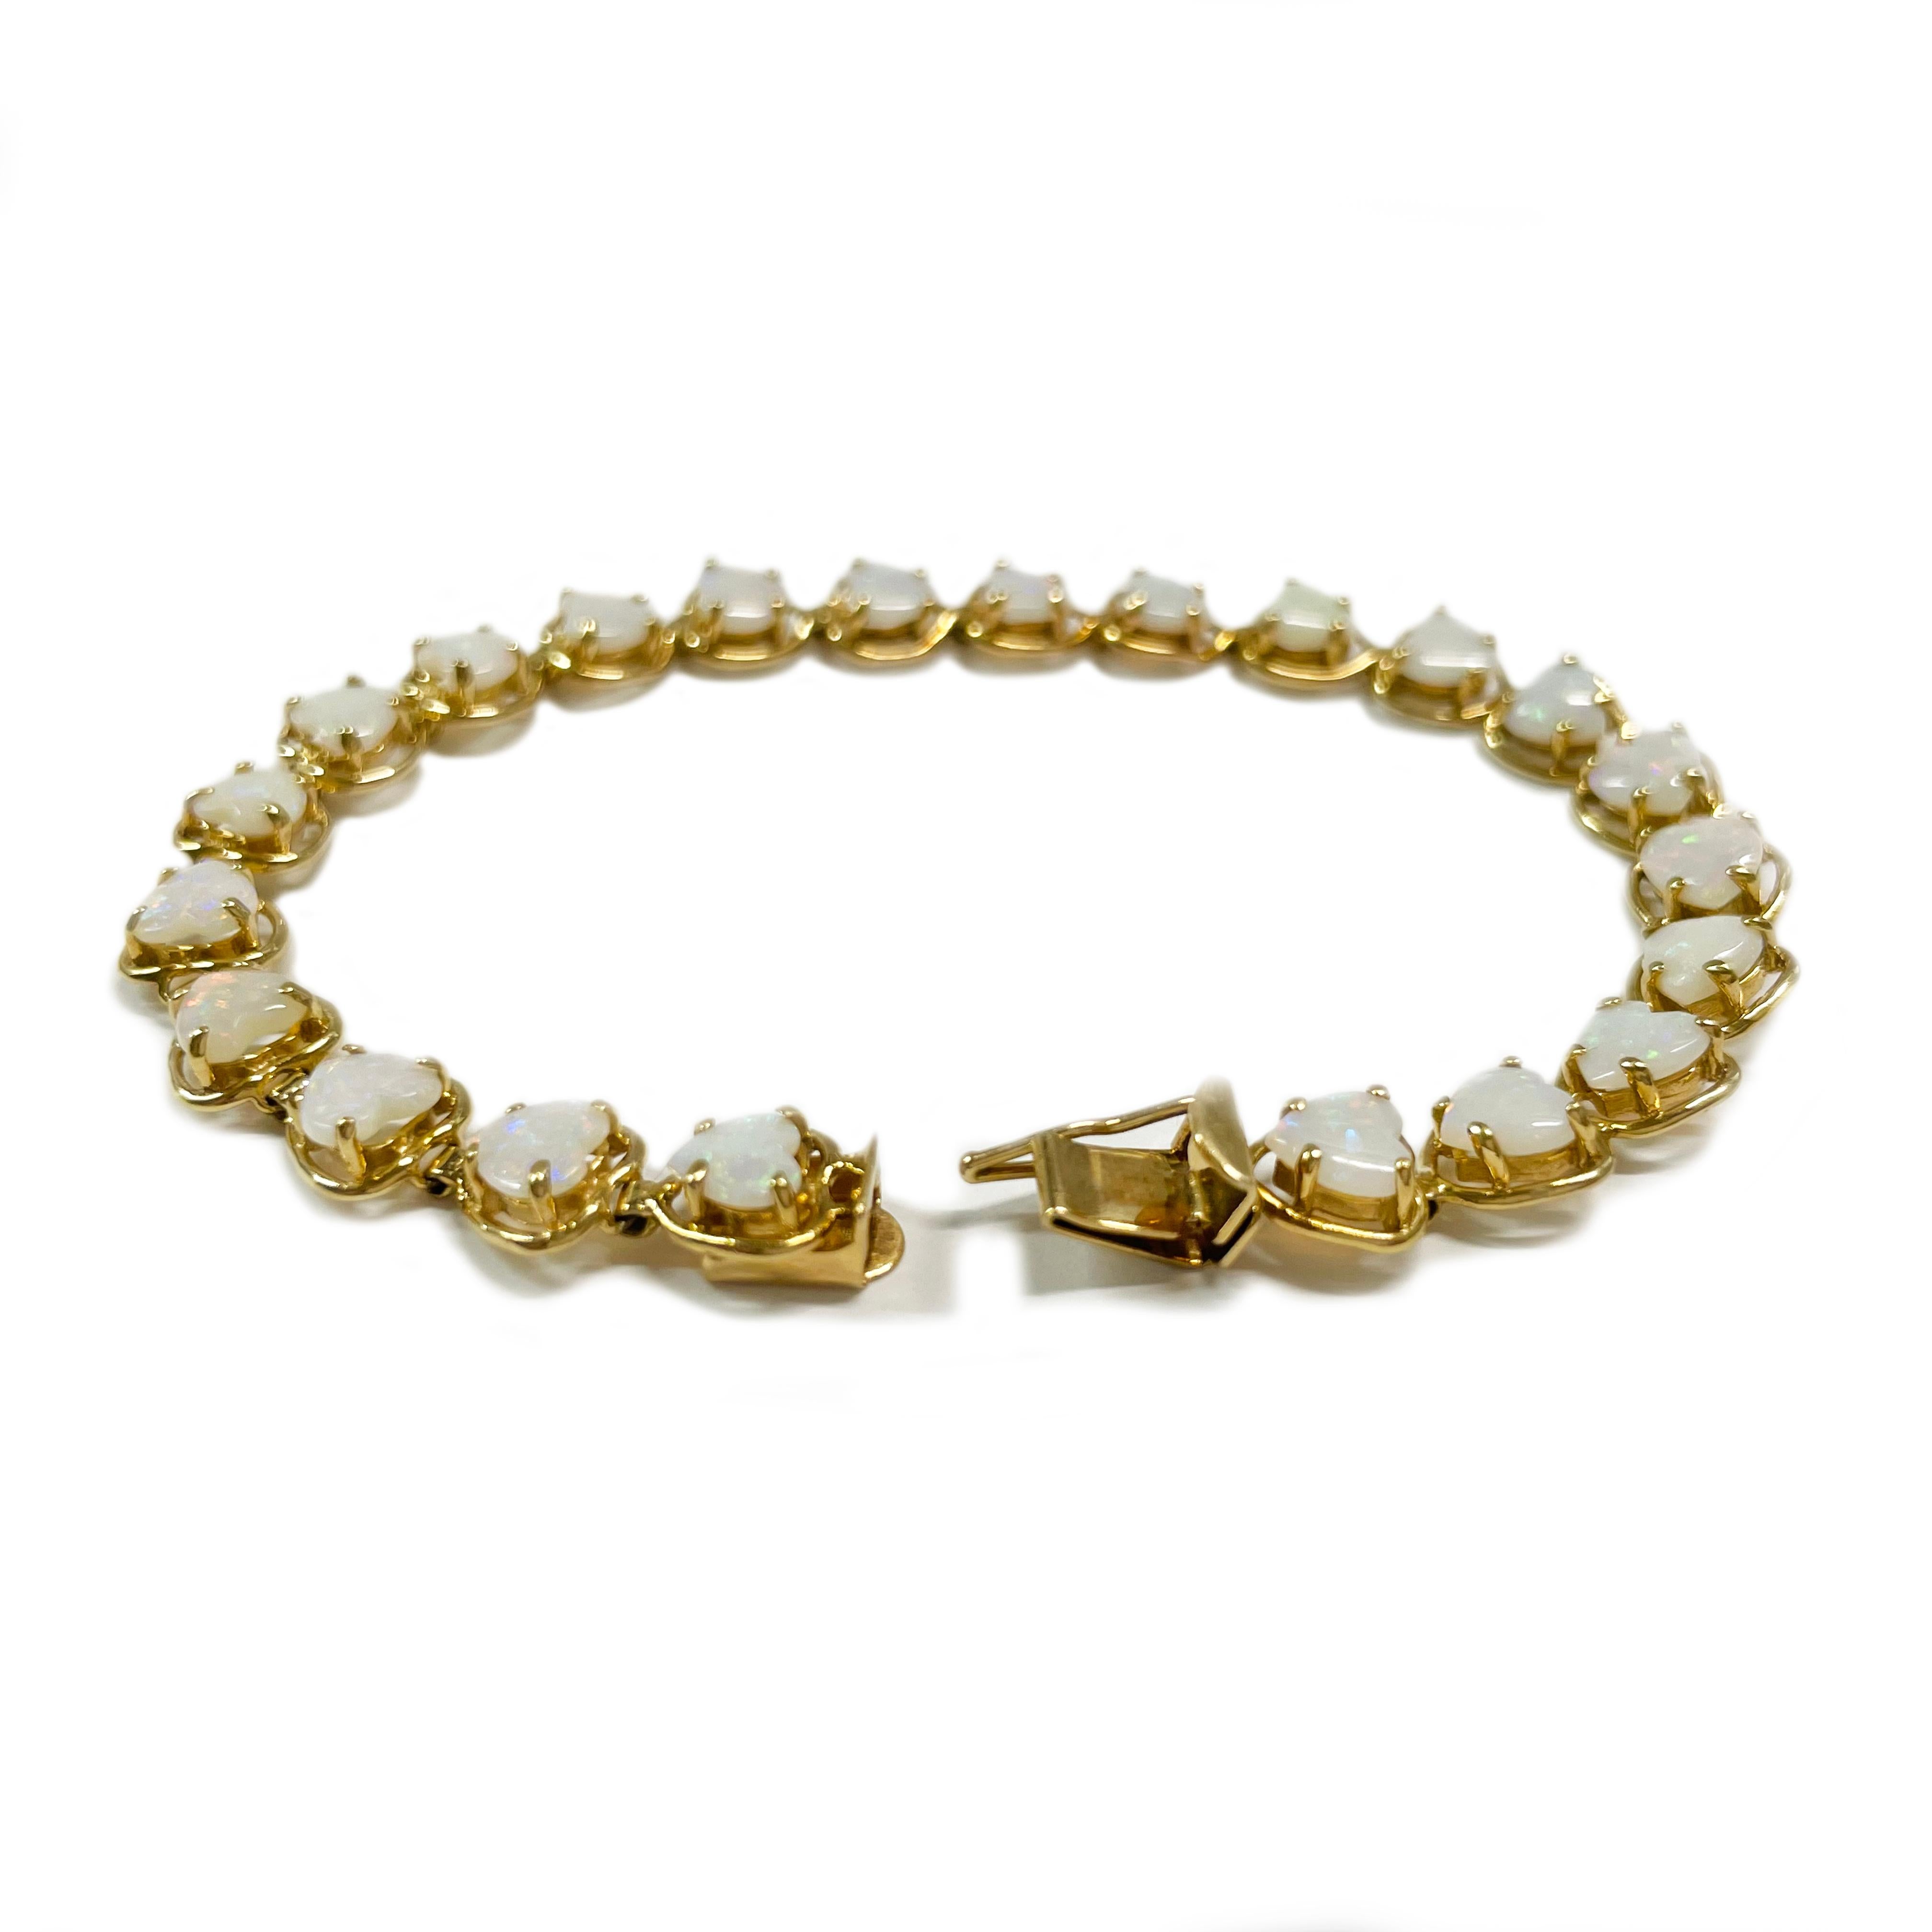 14 Karat Yellow Gold Opal Heart Bracelet. This lovely 1980s link bracelet contains twenty-two heart-shaped Opals set in an open bezel. The opal hearts measure 5 x 4.8mm and the bracelet is 6.5